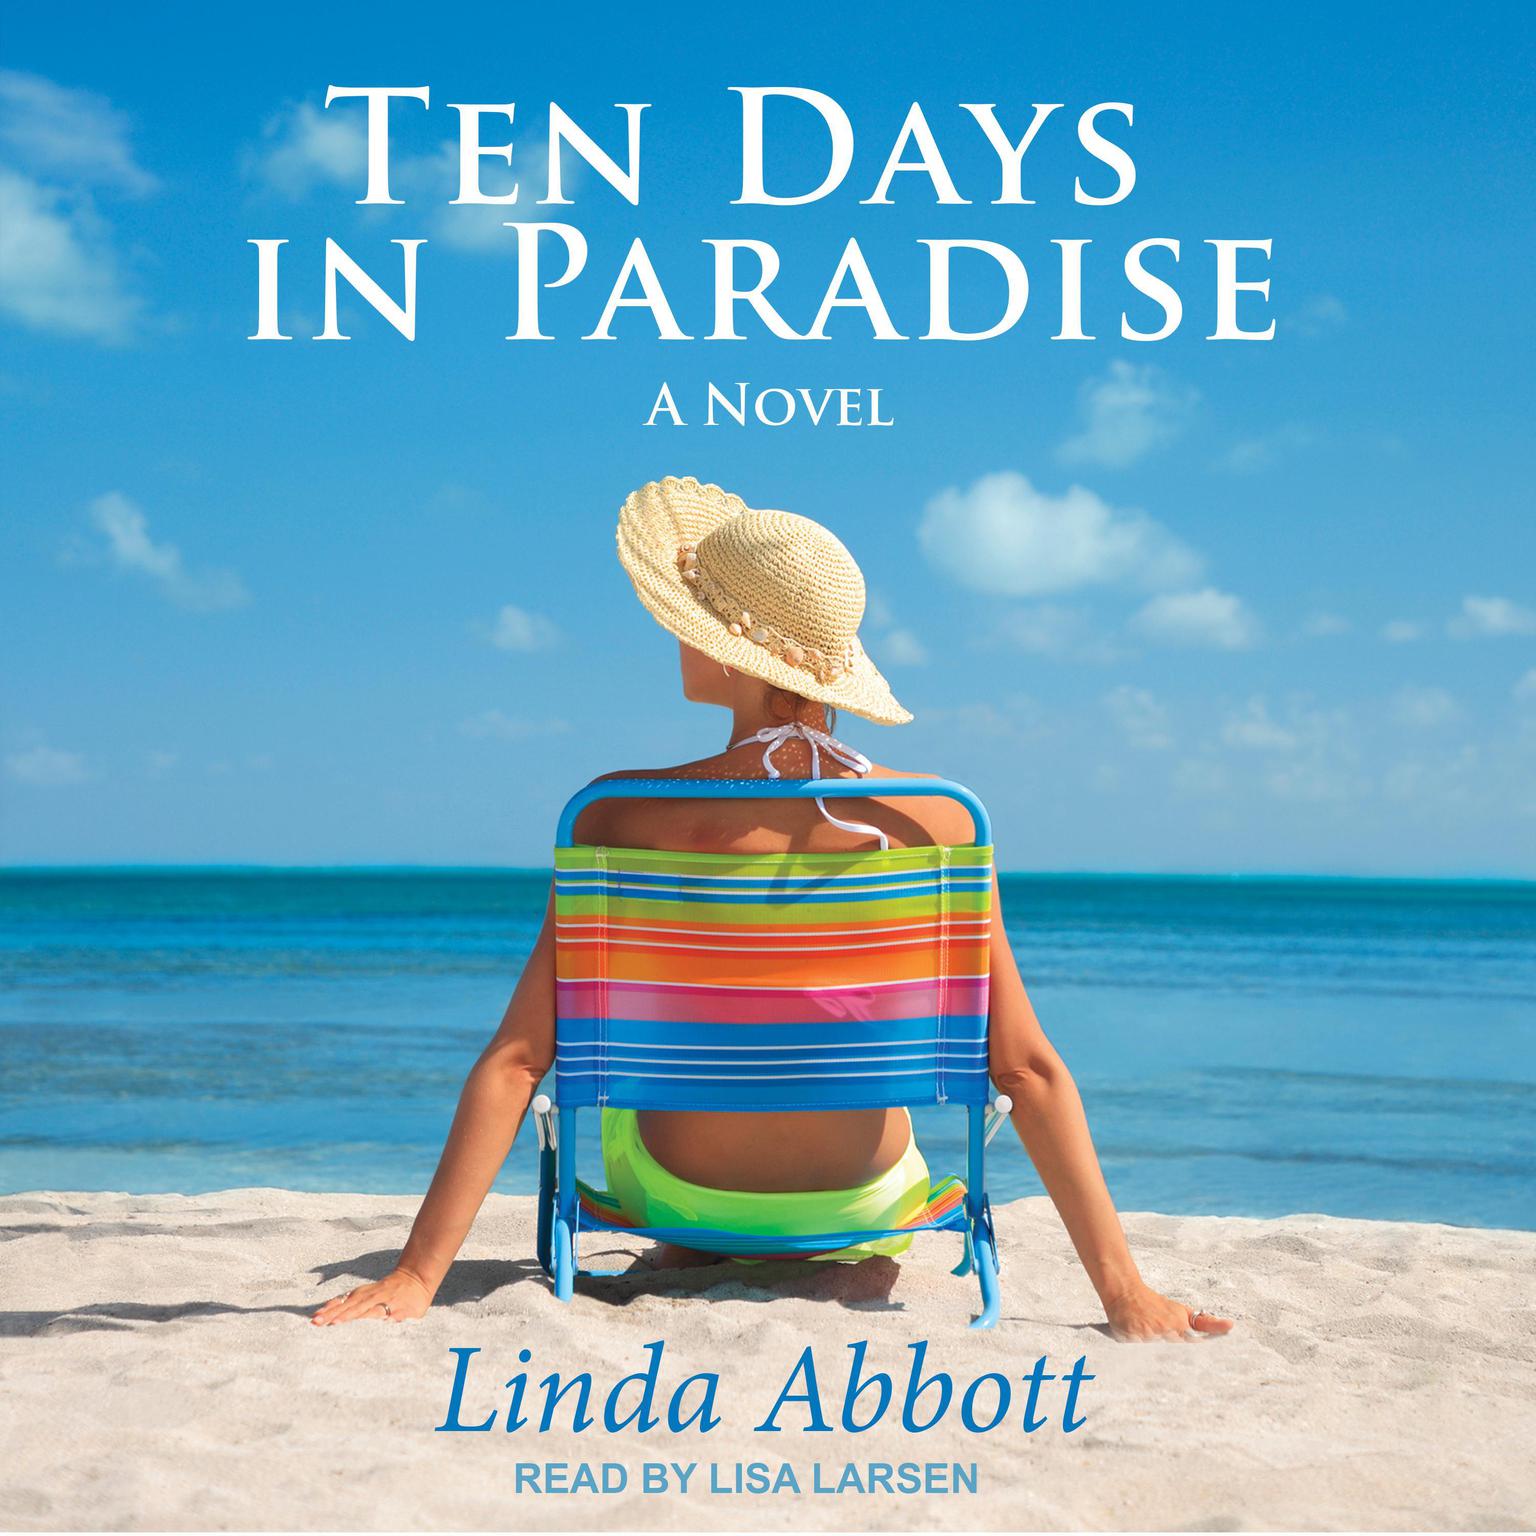 Ten Days In Paradise: A Novel Audiobook, by Linda Abbott